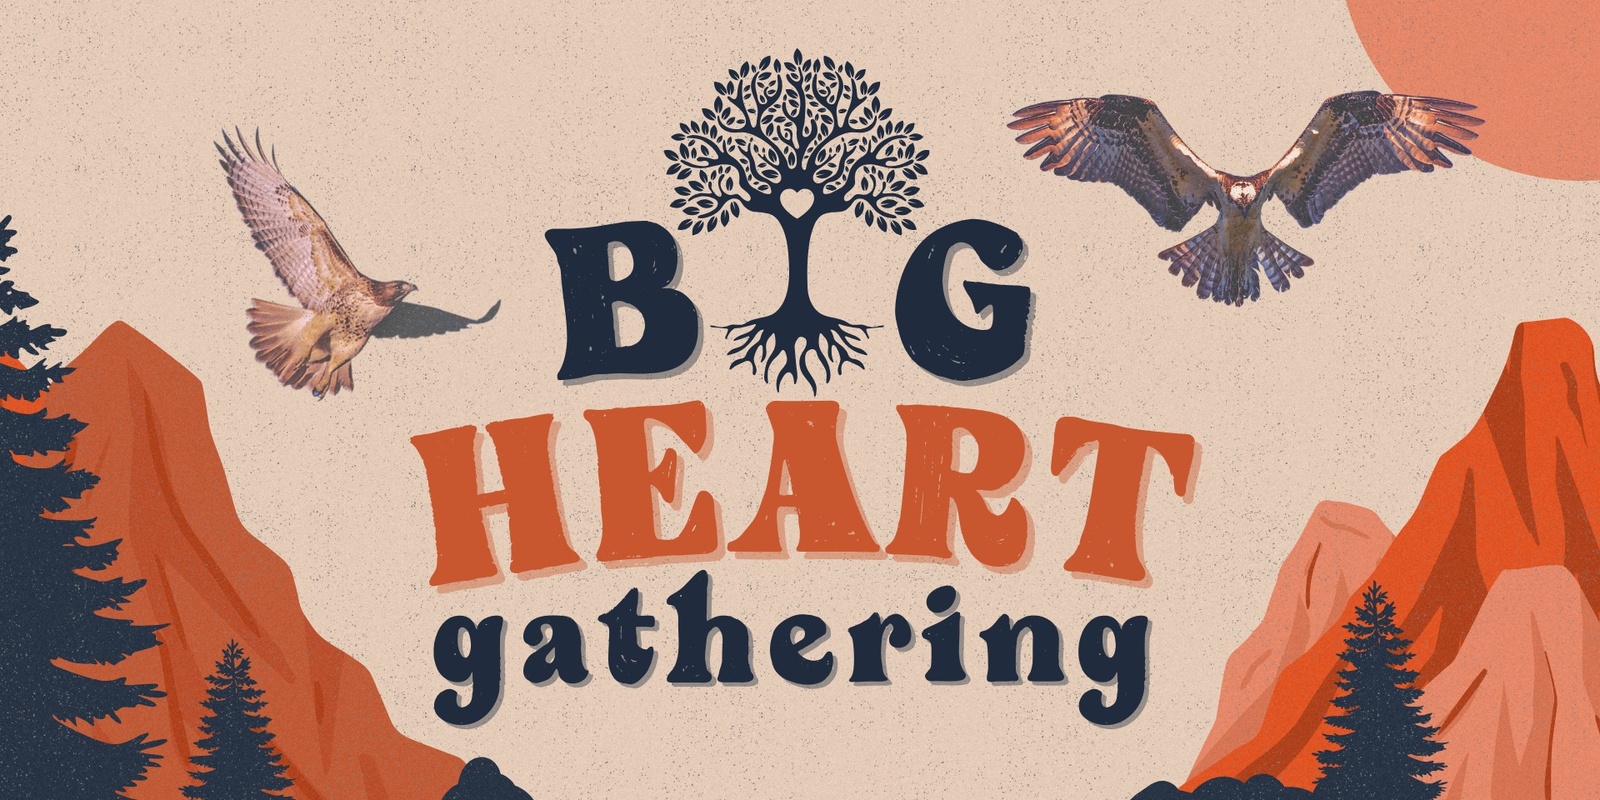 Big Heart Gathering's banner